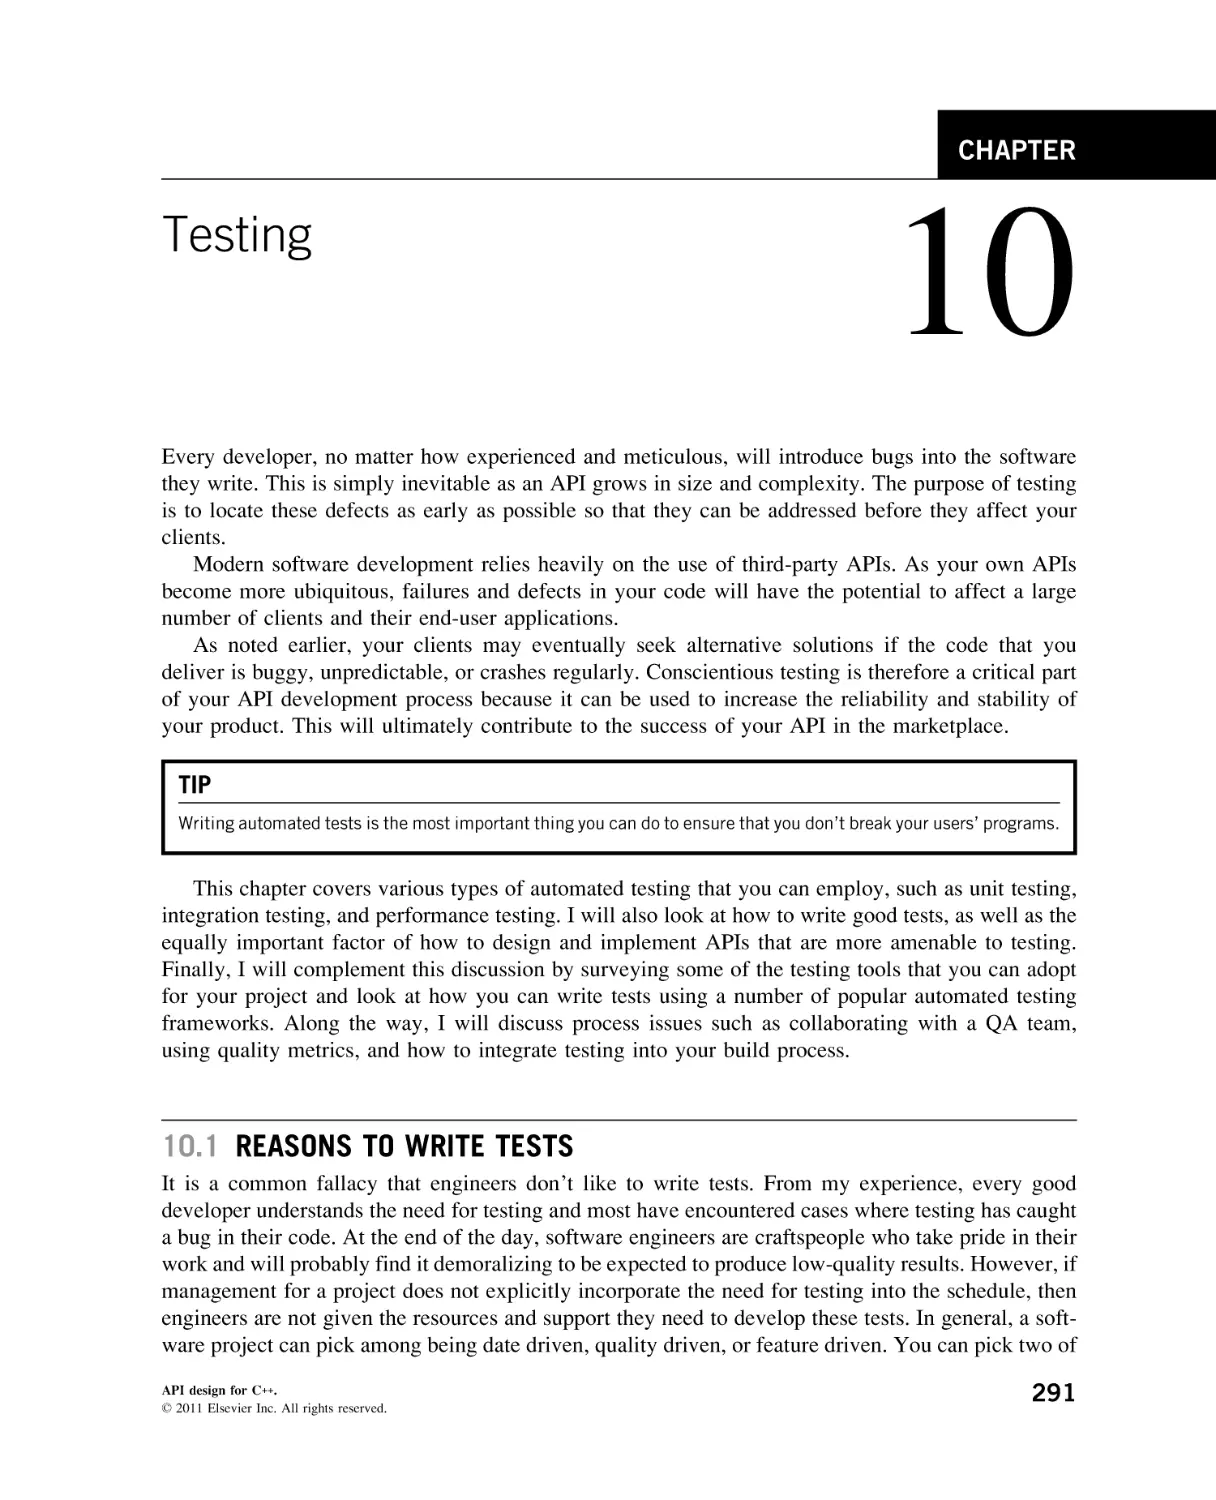 Testing
Reasons to Write Tests